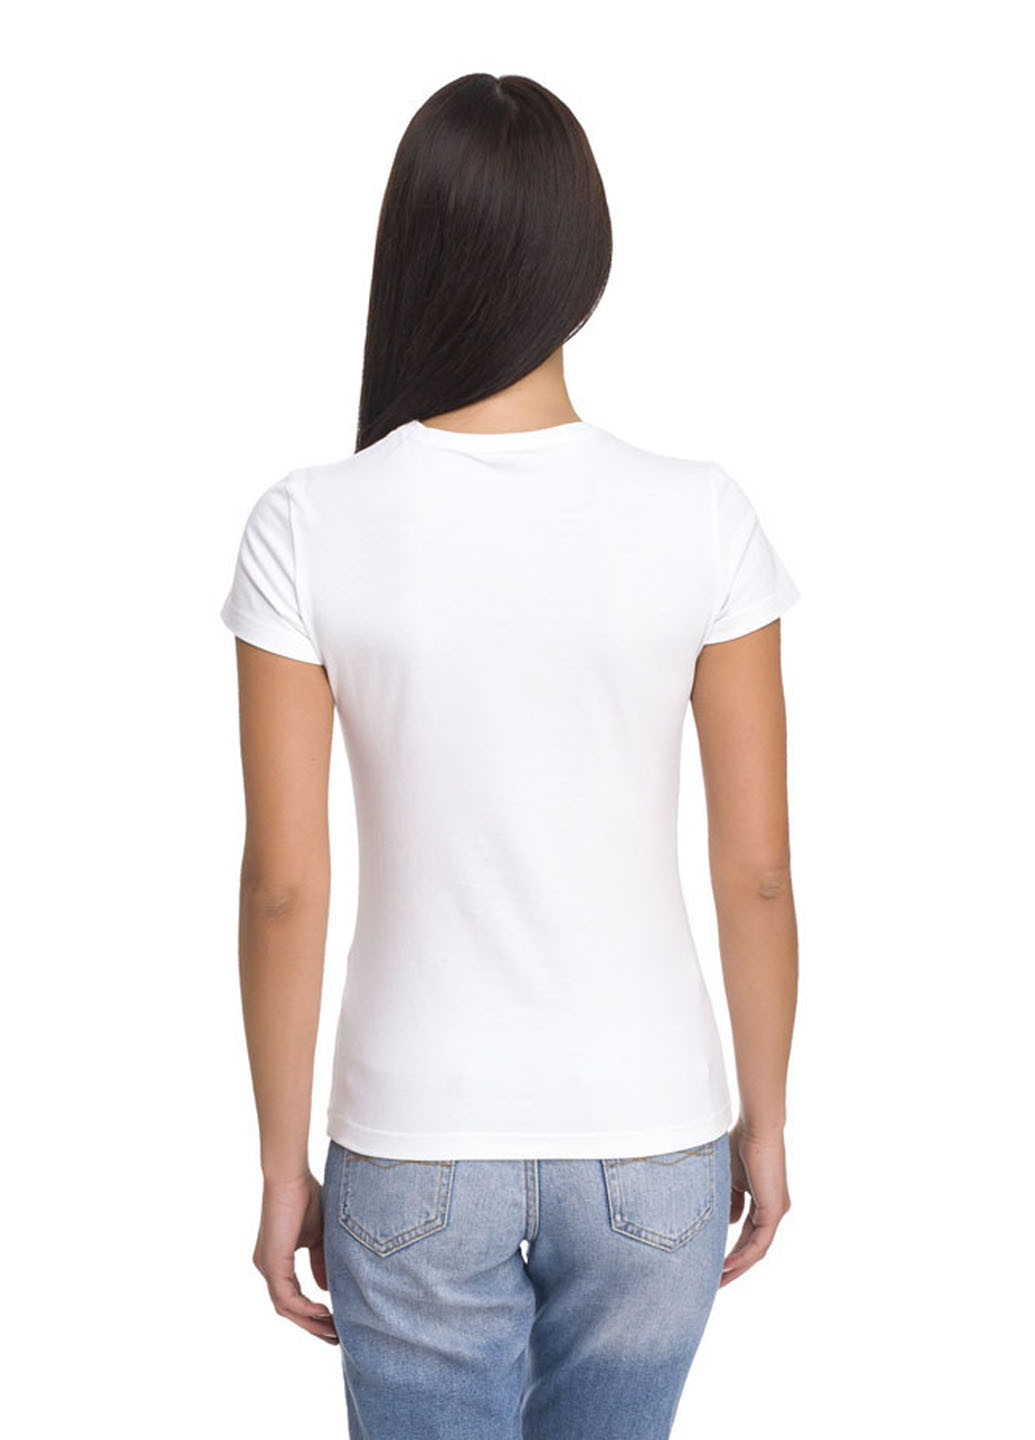 Белая летняя футболка Promin.